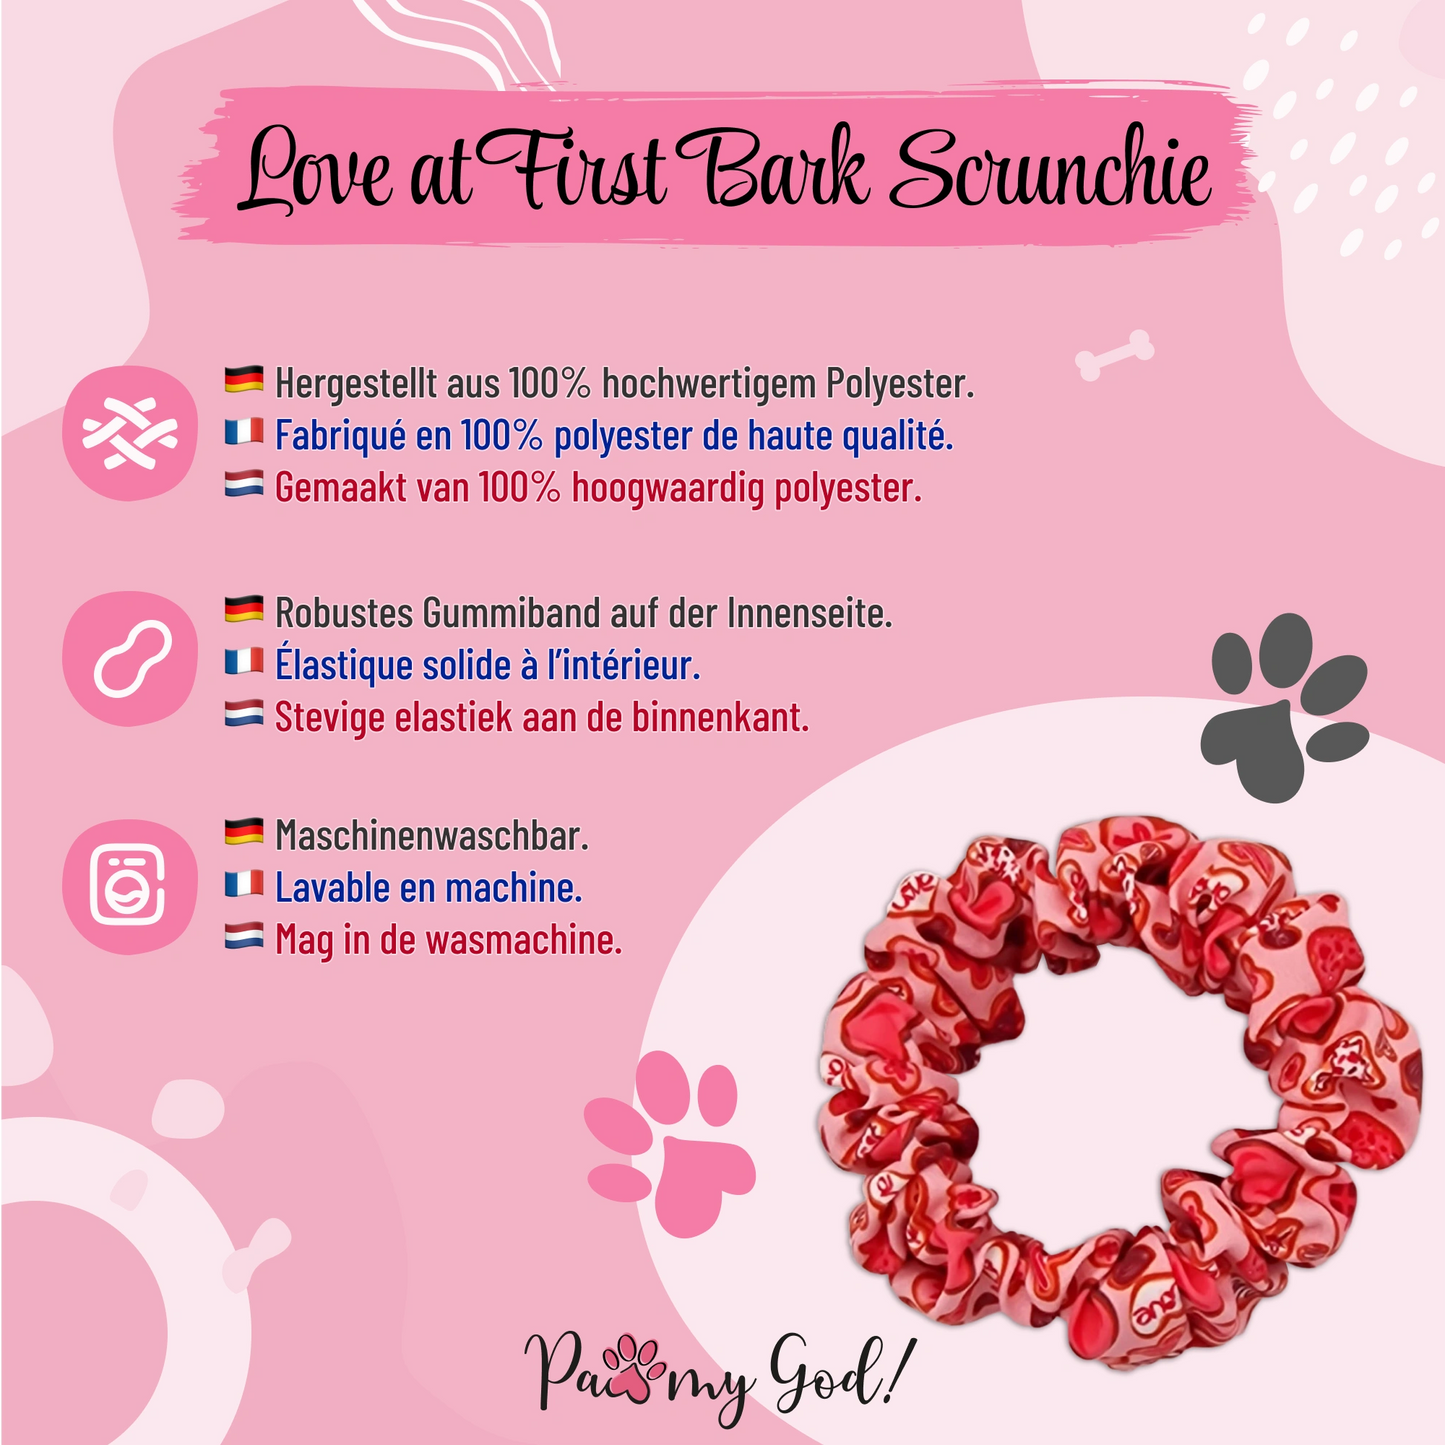 Love at First Bark Scrunchie